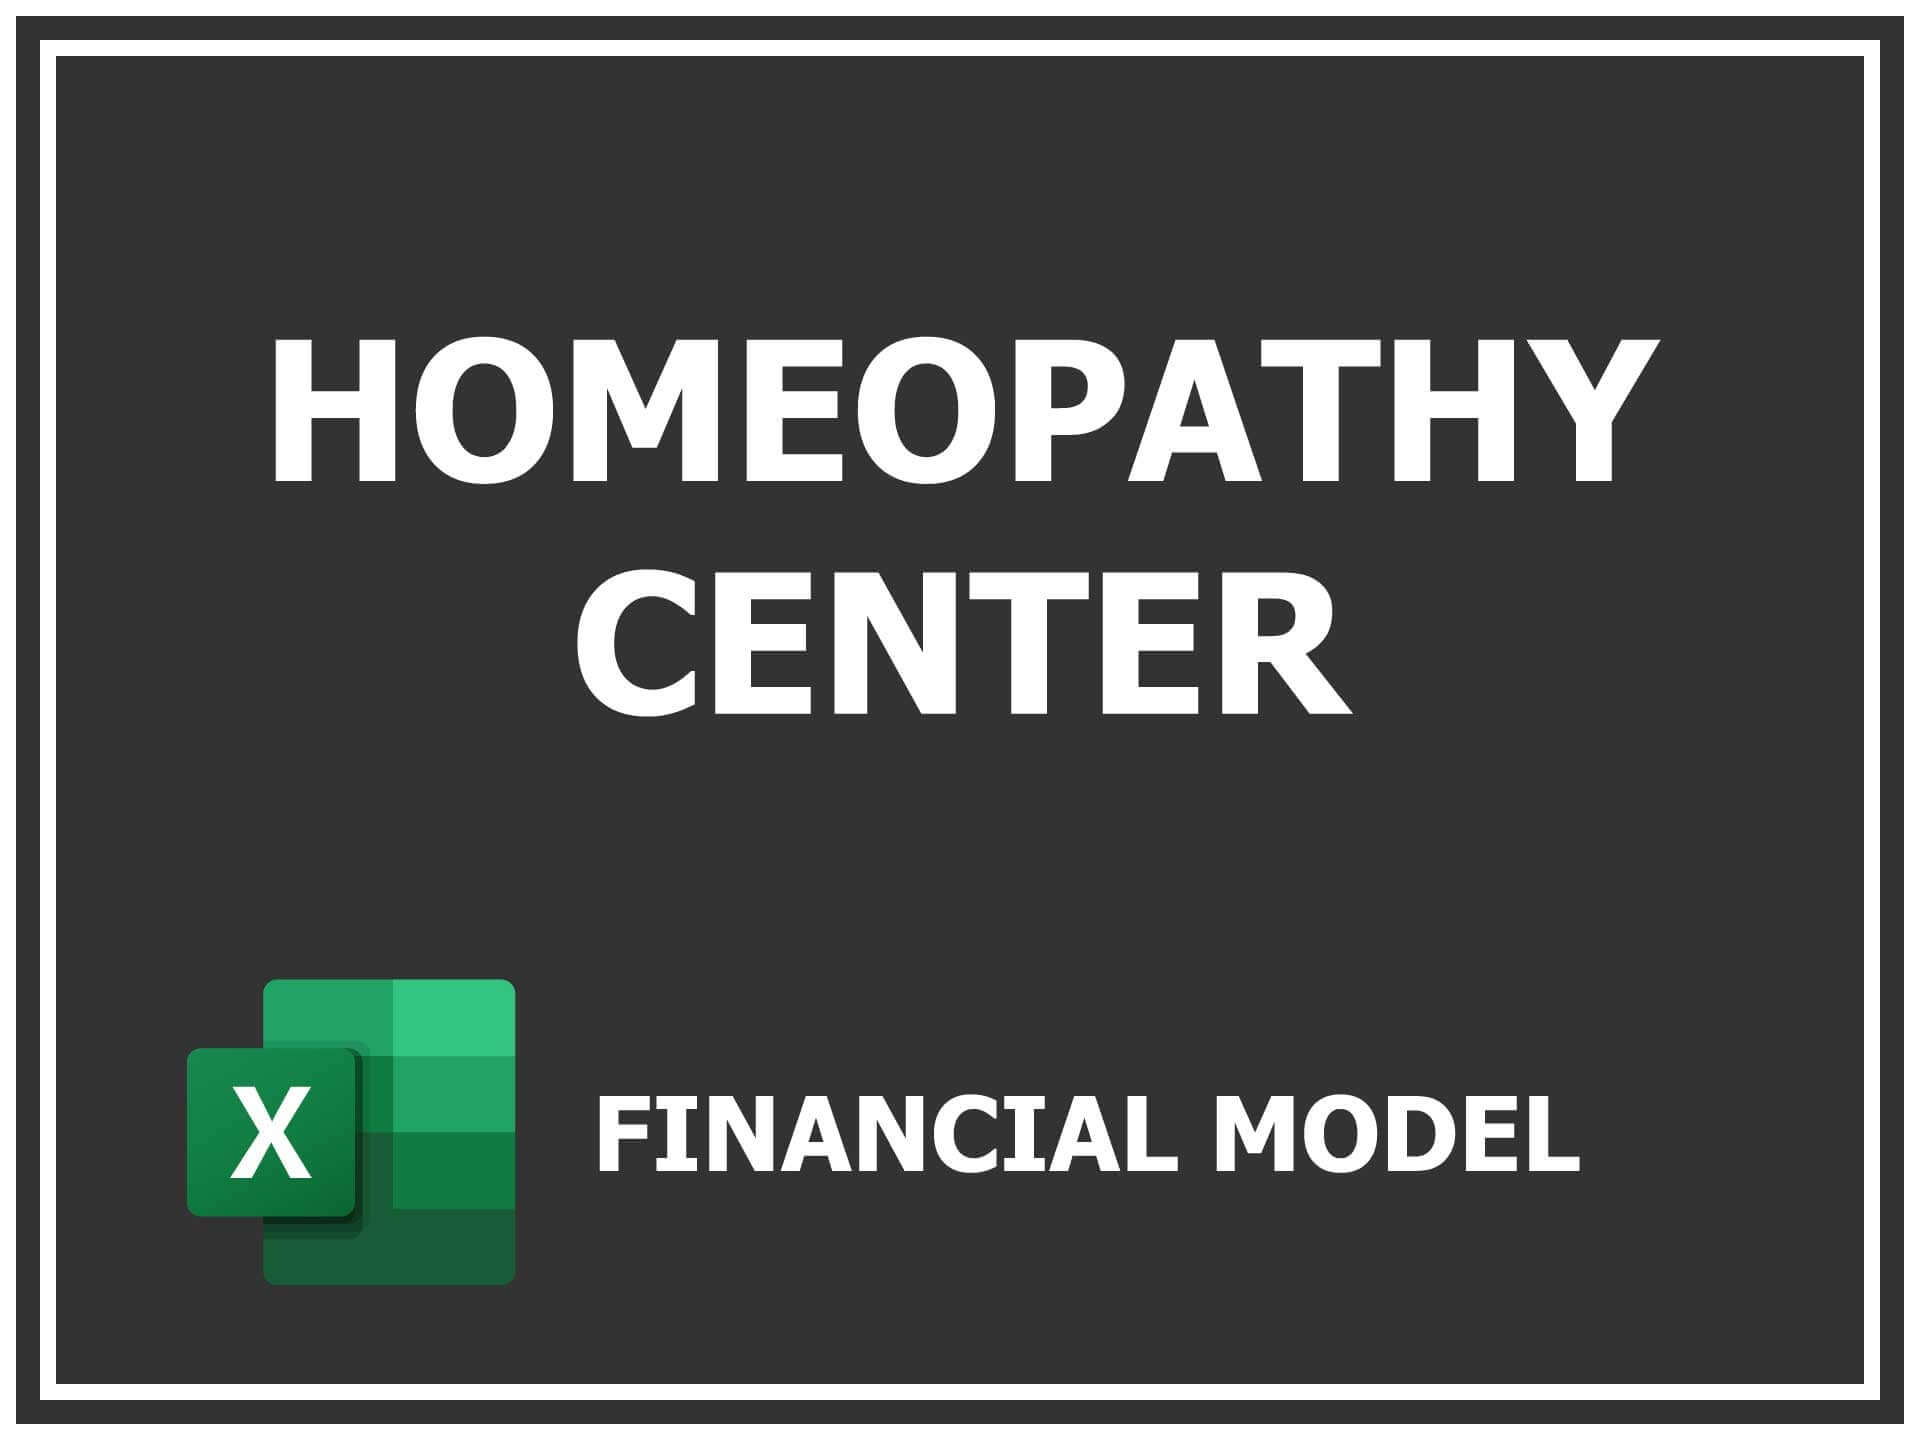 homeopathy pharmacy business plan